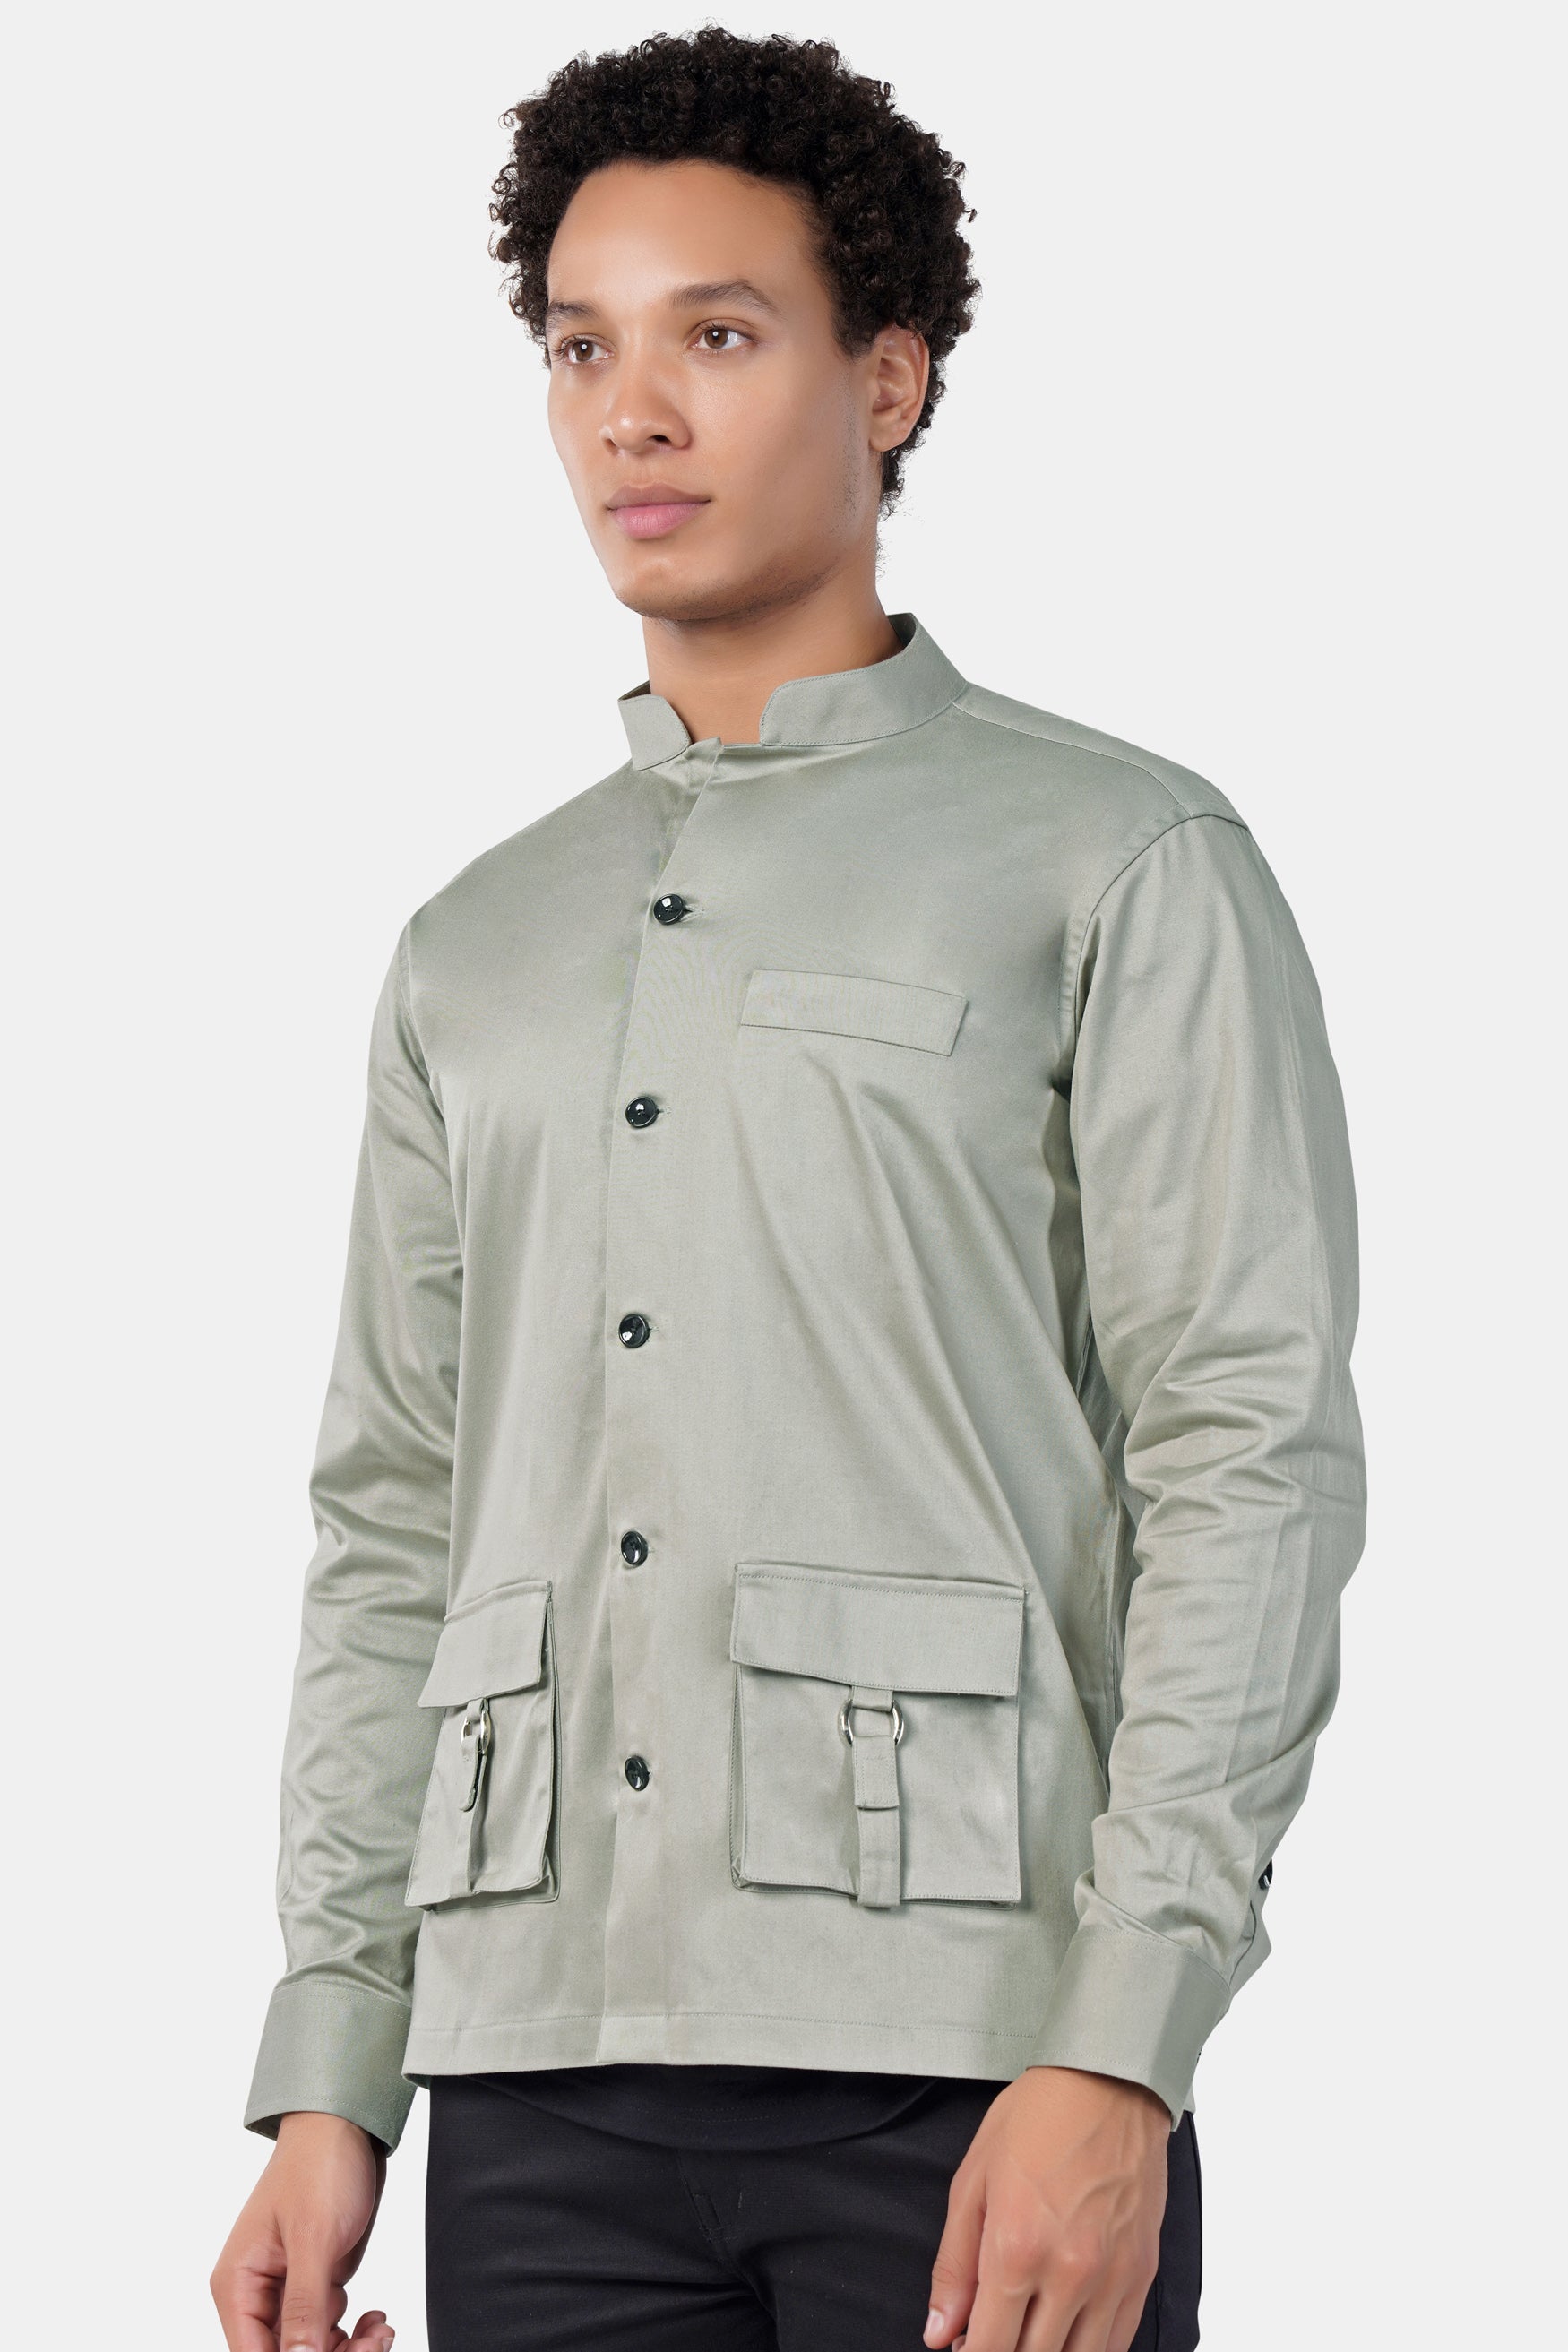 Chalice Gray Premium Cotton Designer Jacket